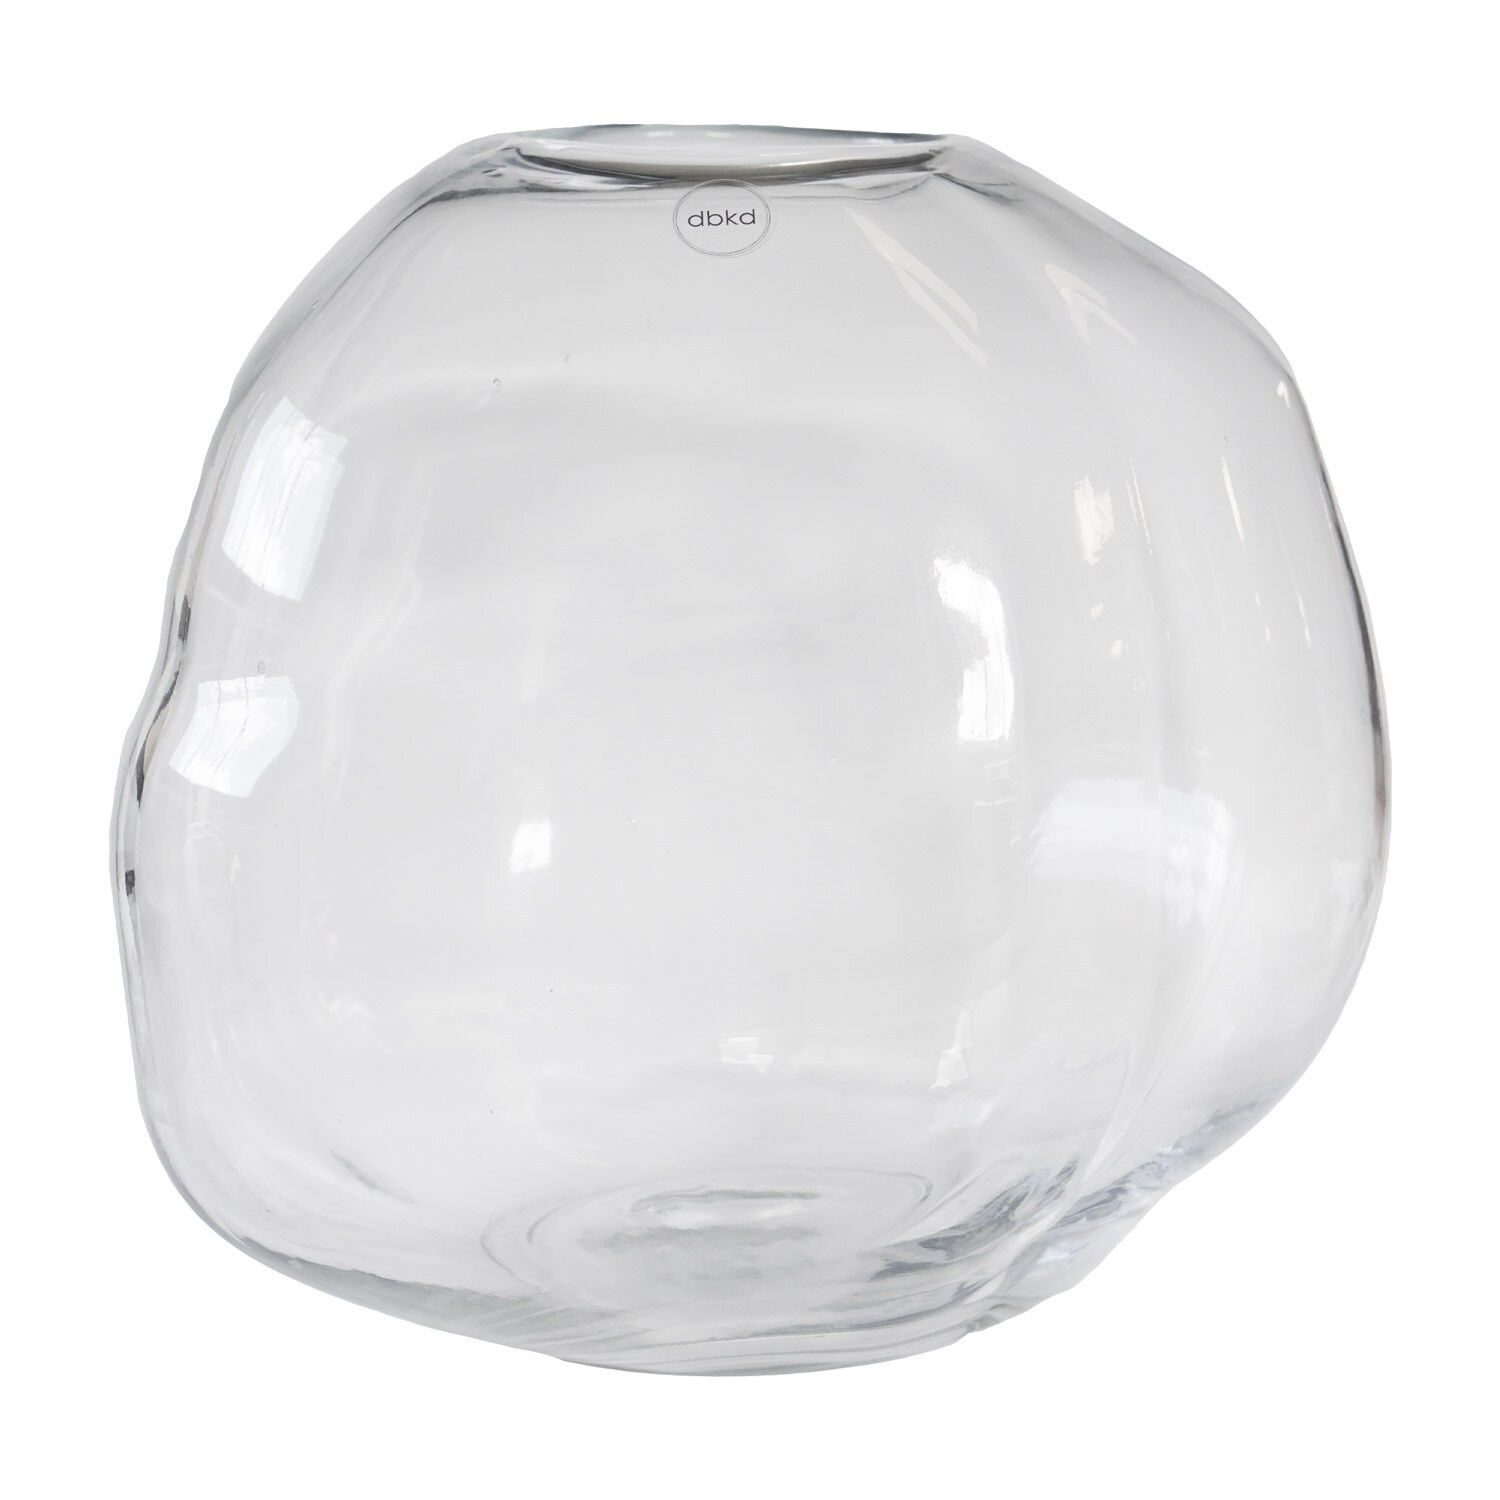 Dbkd Pebble Vas Large - Vaser Glas Klar